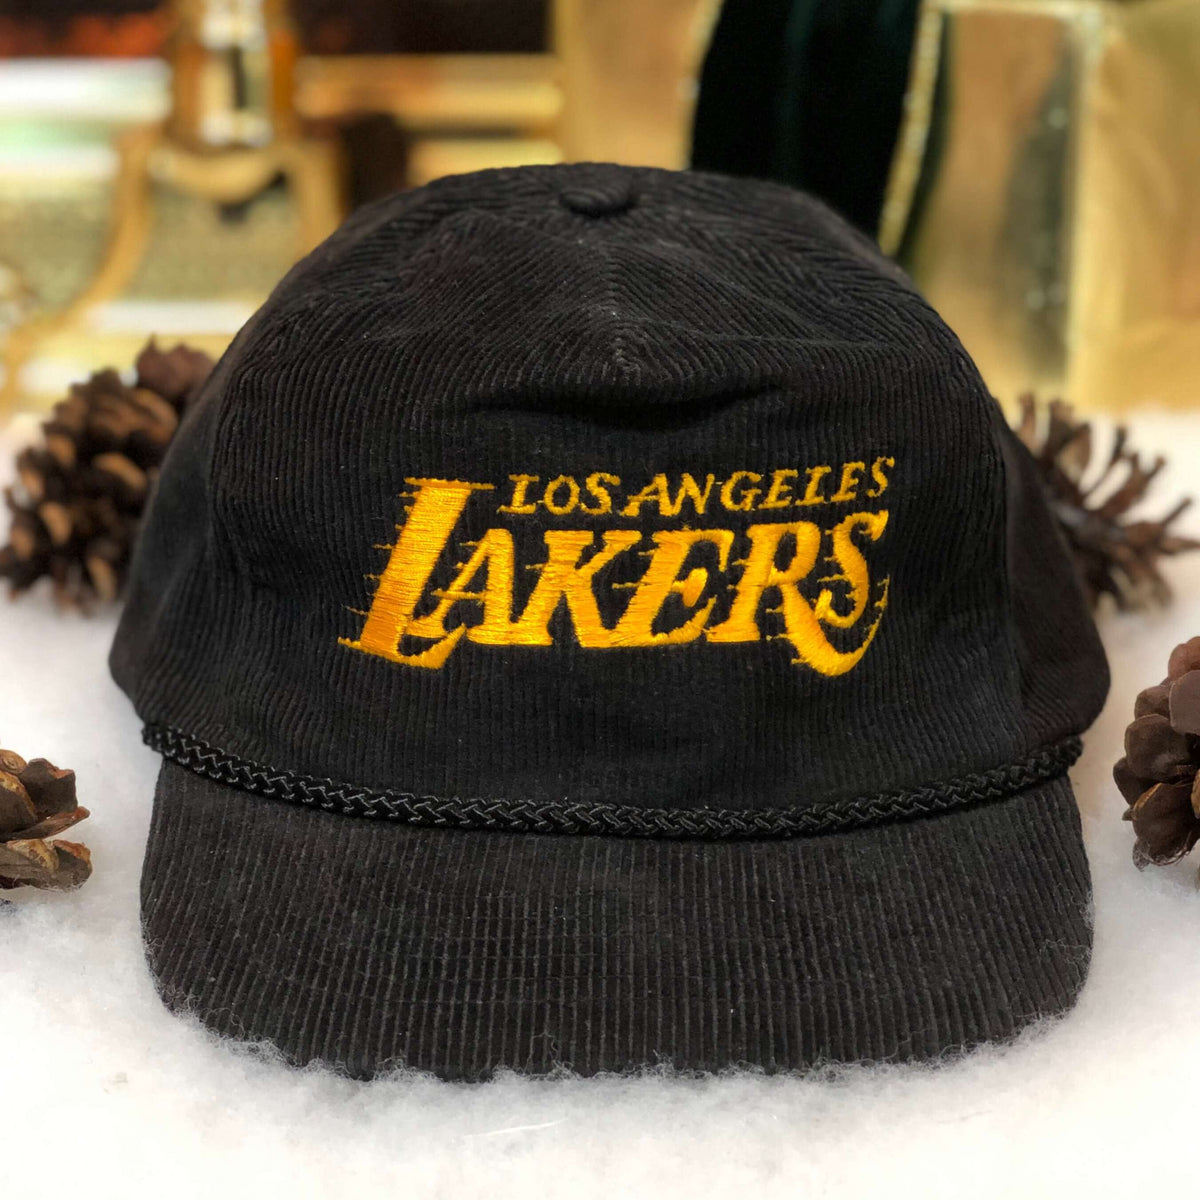 South Bay Lakers Hats, Lakers Caps, Snapbacks, Beanies